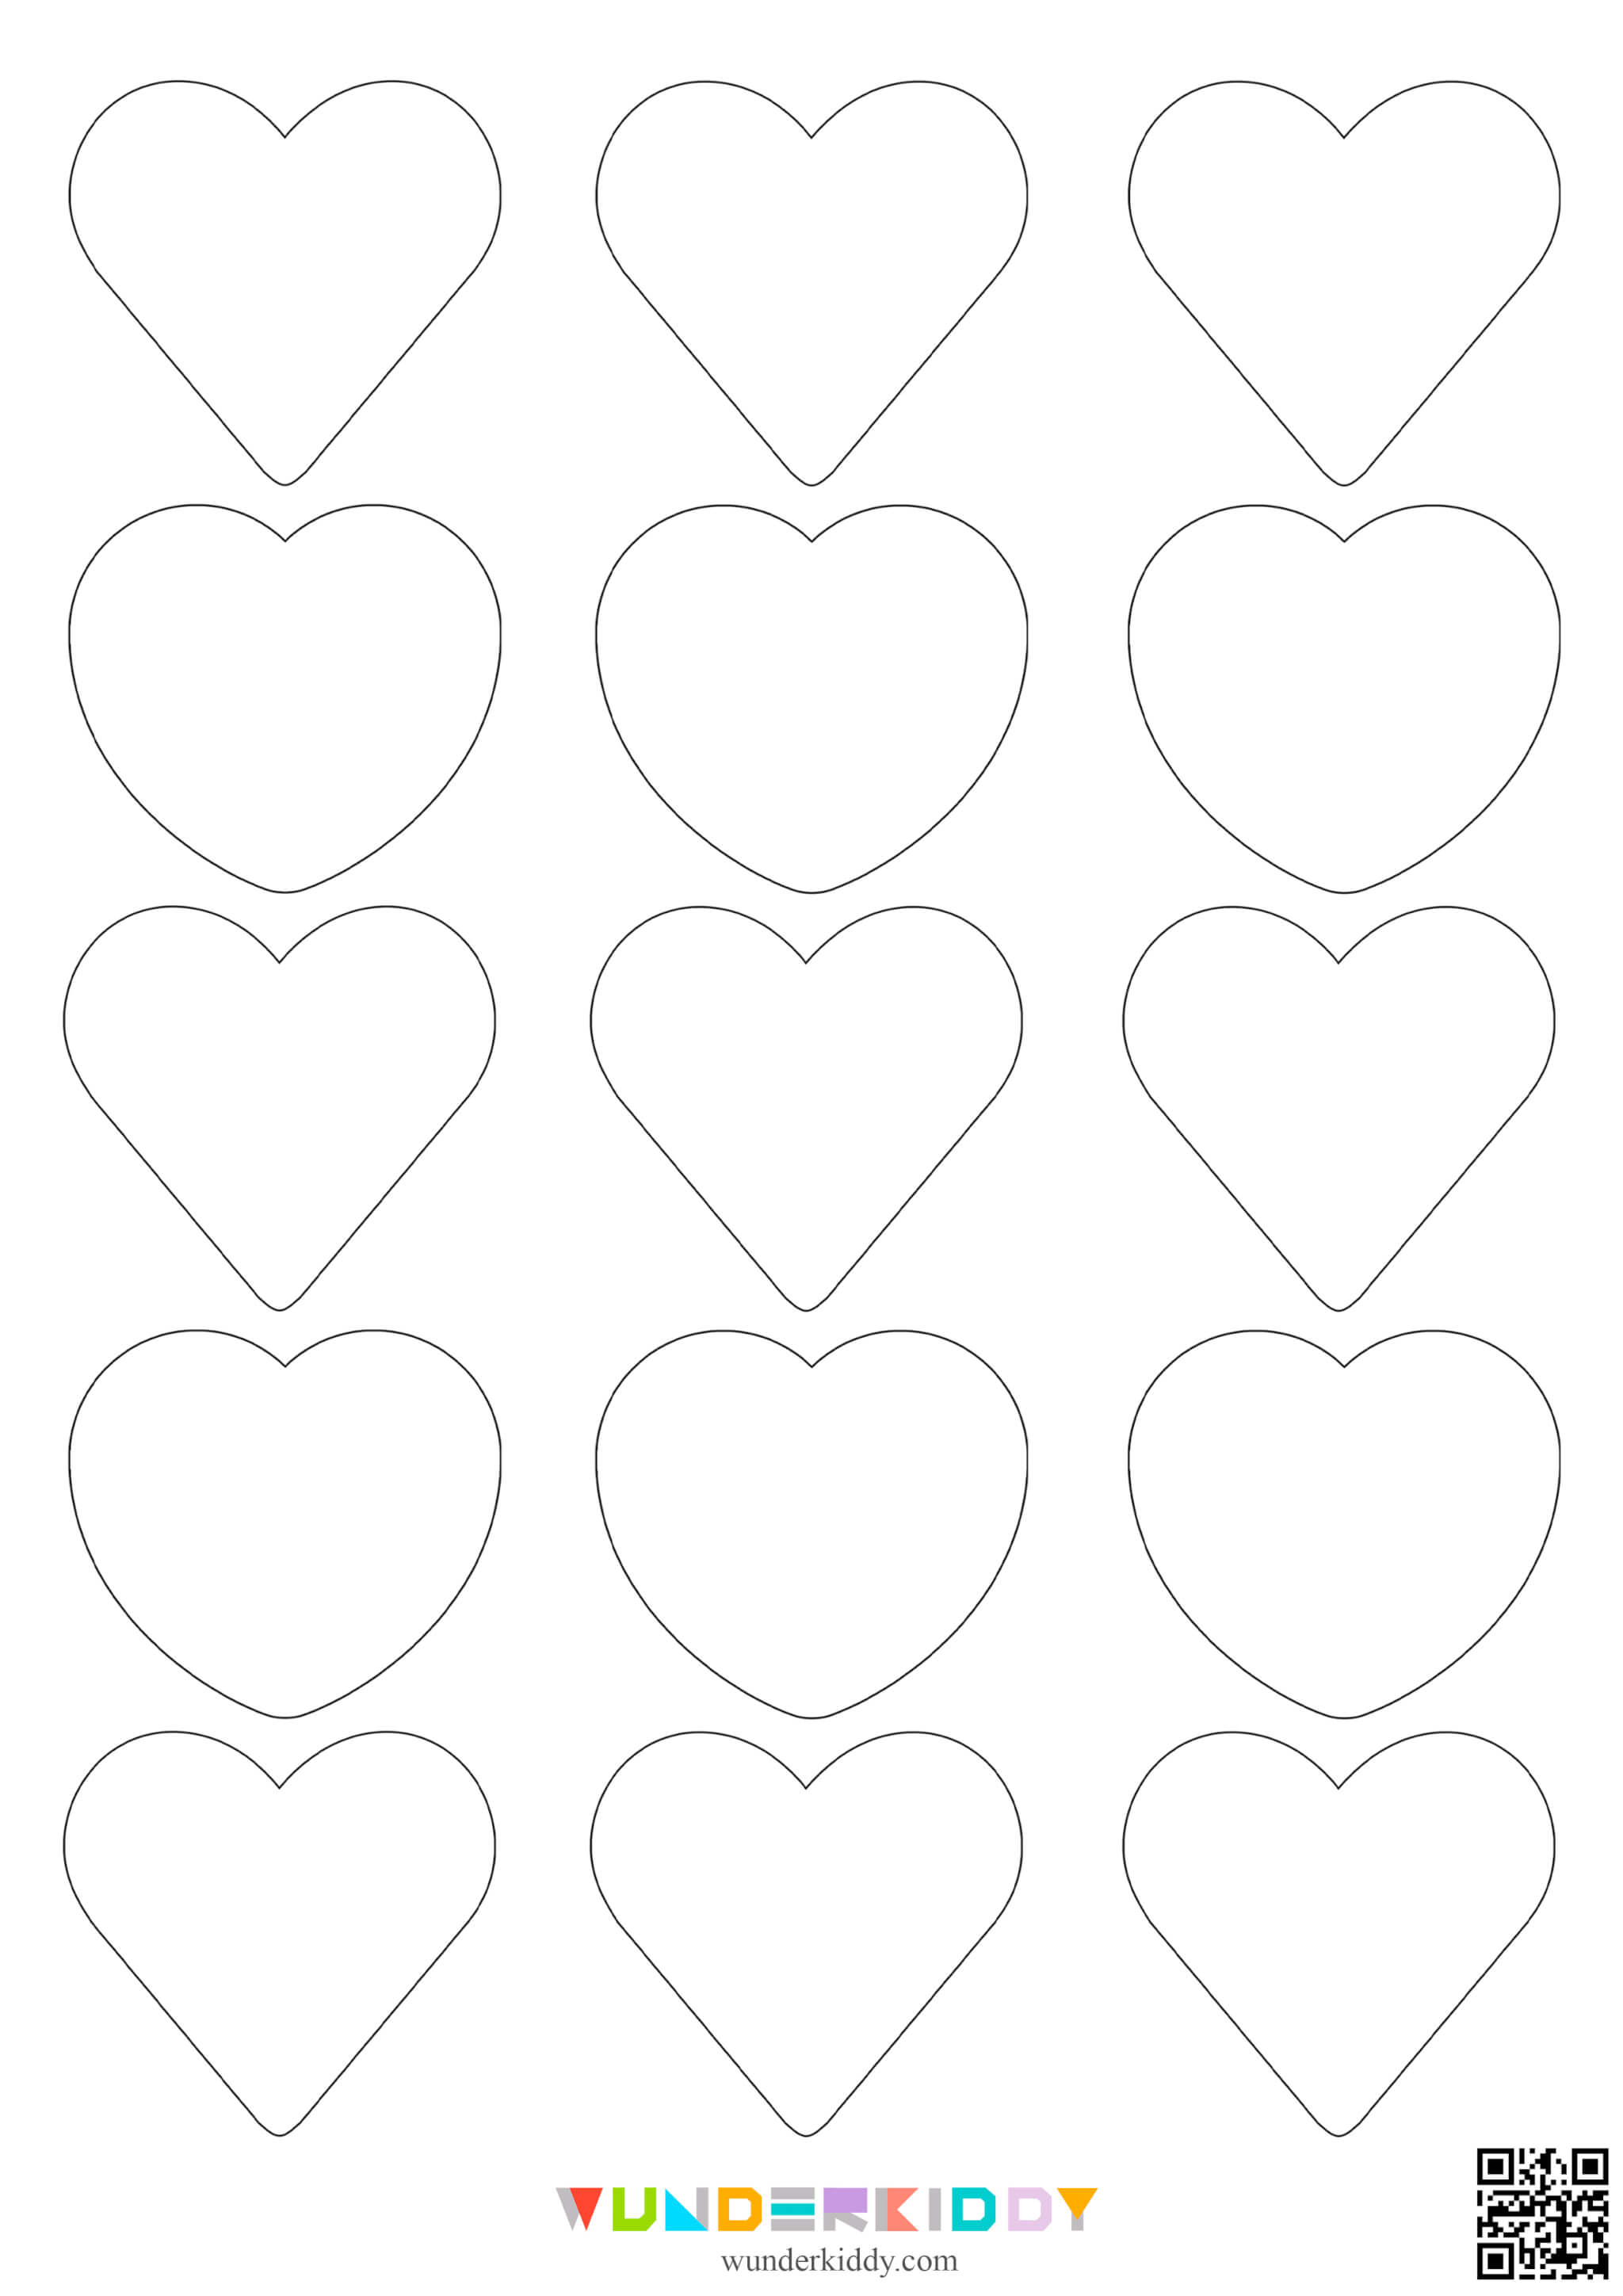 Heart Template Printable - Image 4